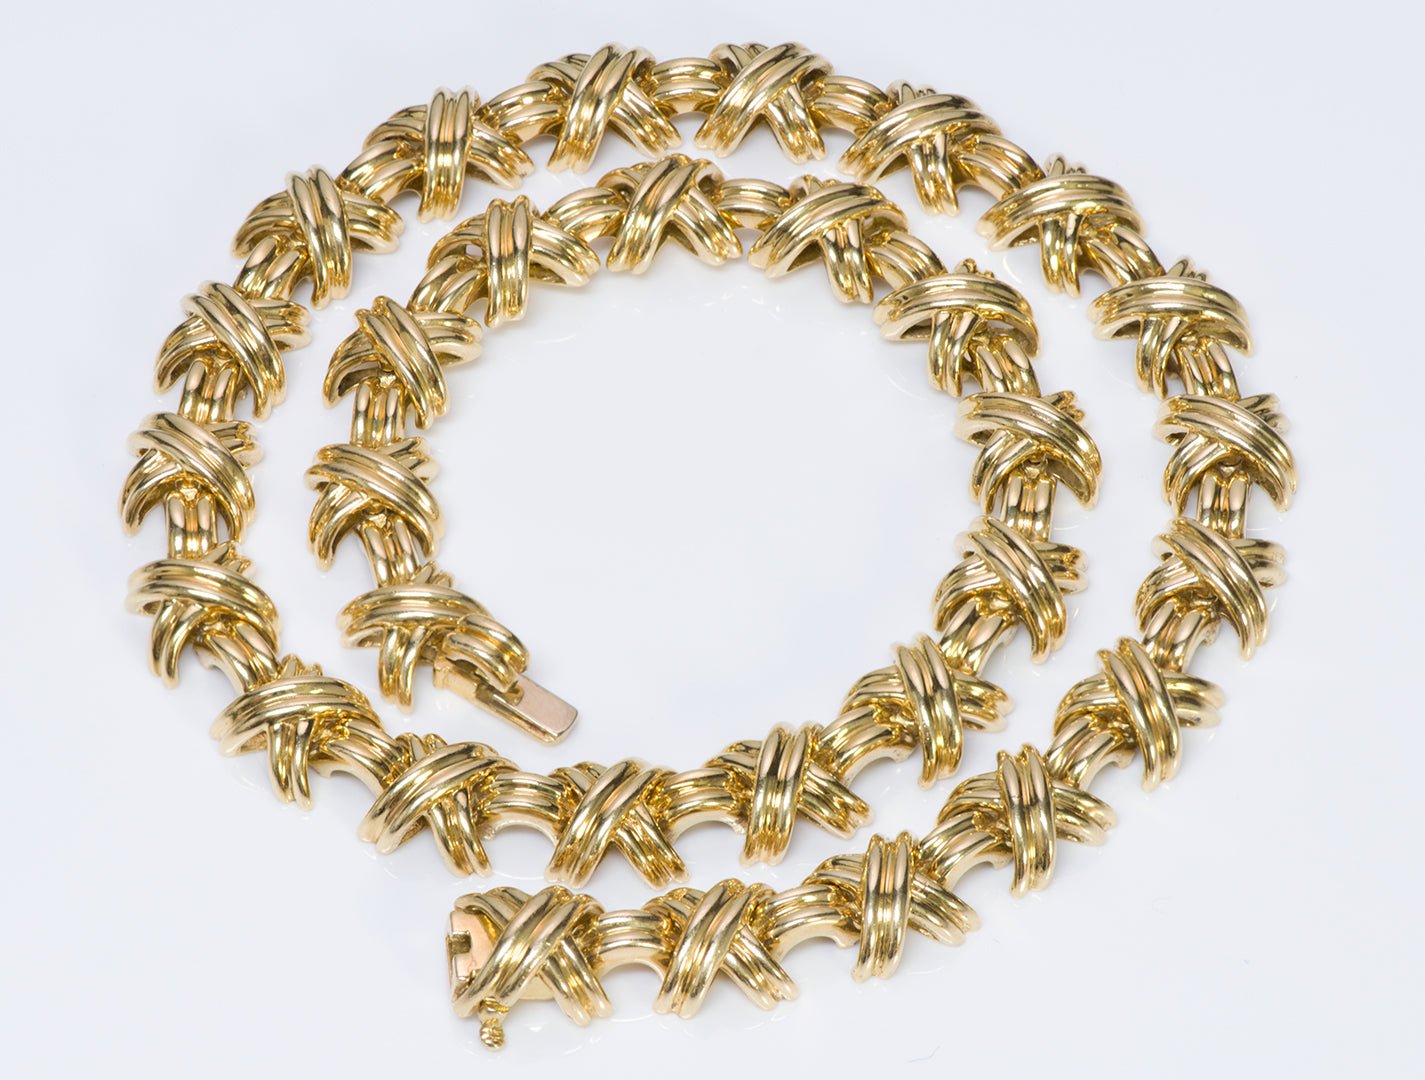 Tiffany & Co. Signature X 18K Gold Necklace